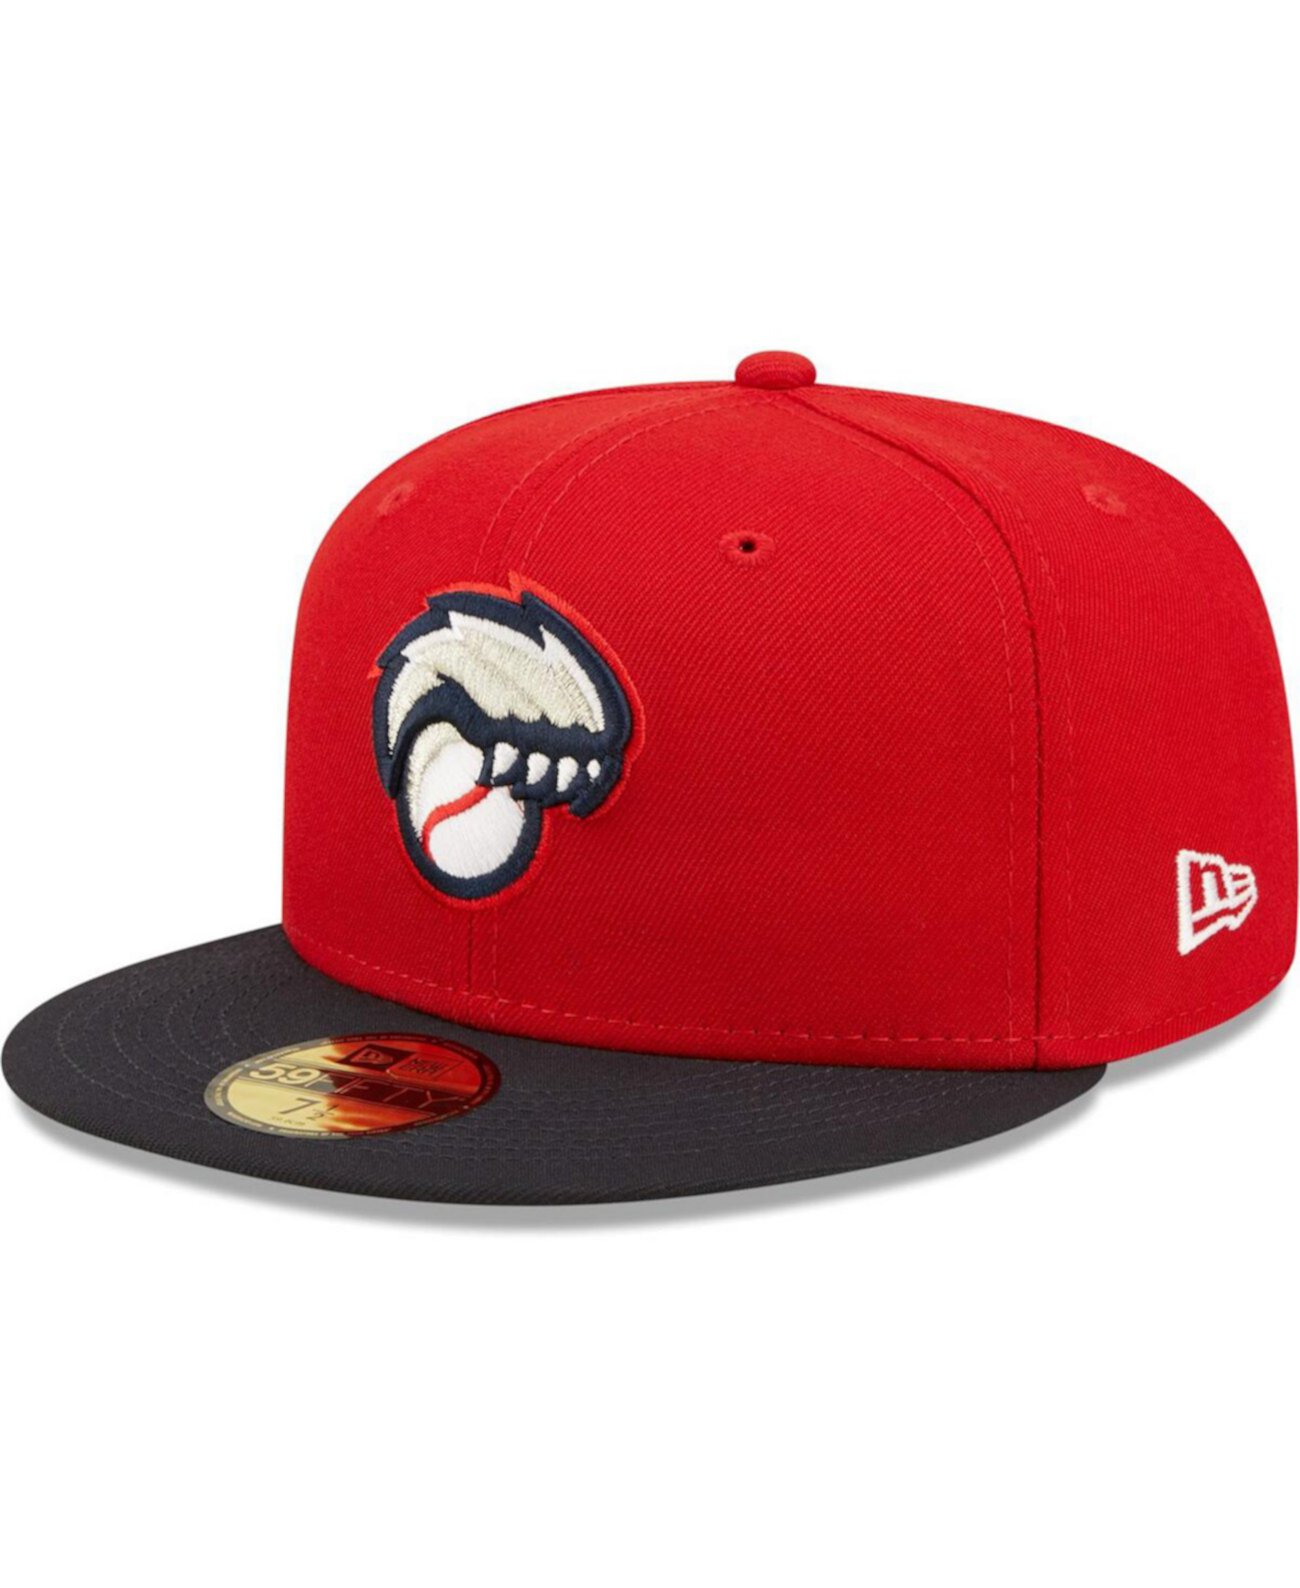 Мужская красная приталенная шляпа New Hampshire Fisher Cats Authentic Collection Team Alternate 59FIFTY New Era